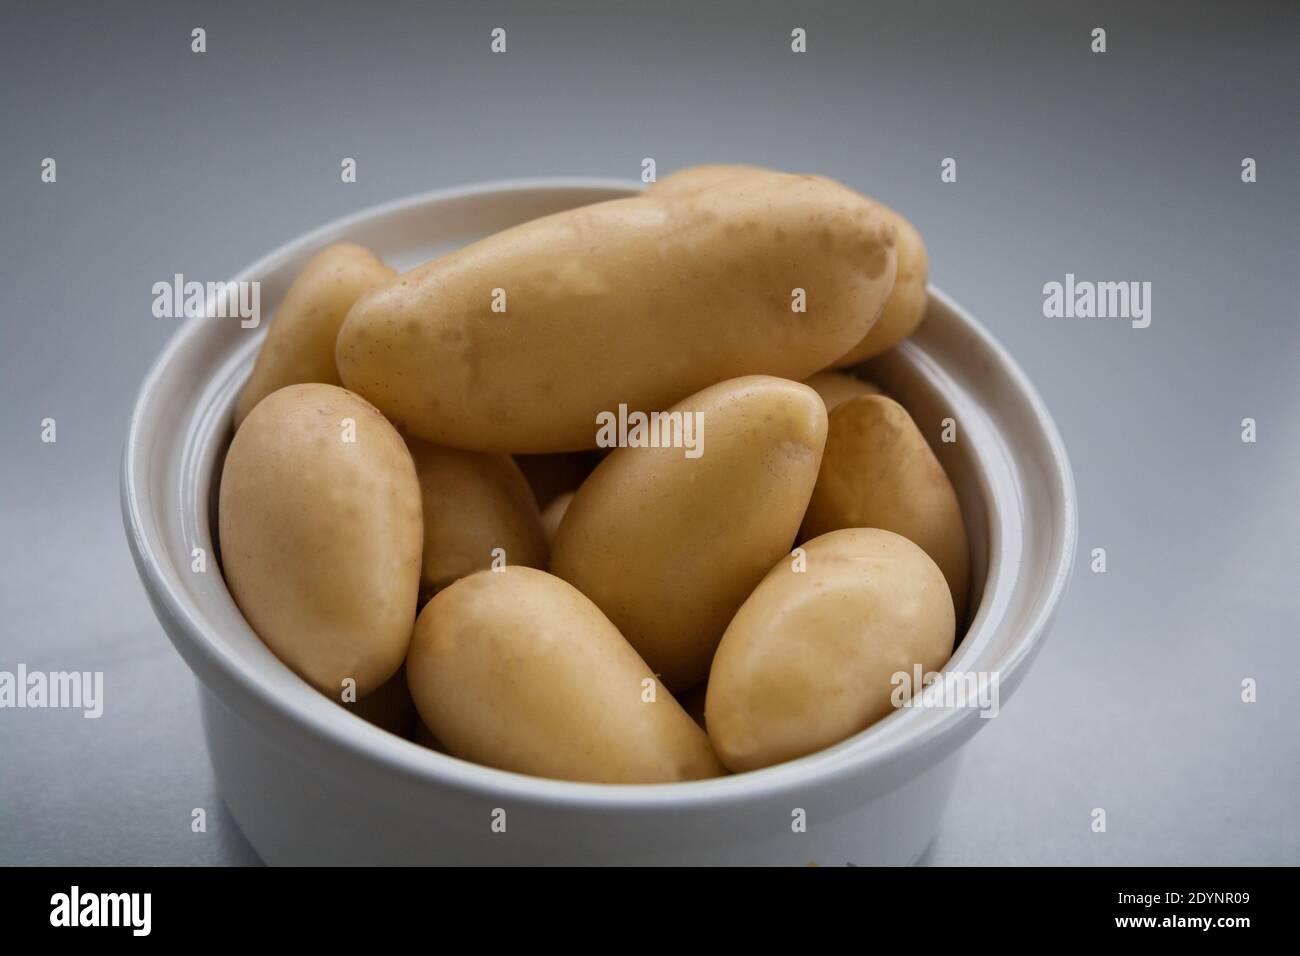 Bowl of Welsh salad potatoes Stock Photo